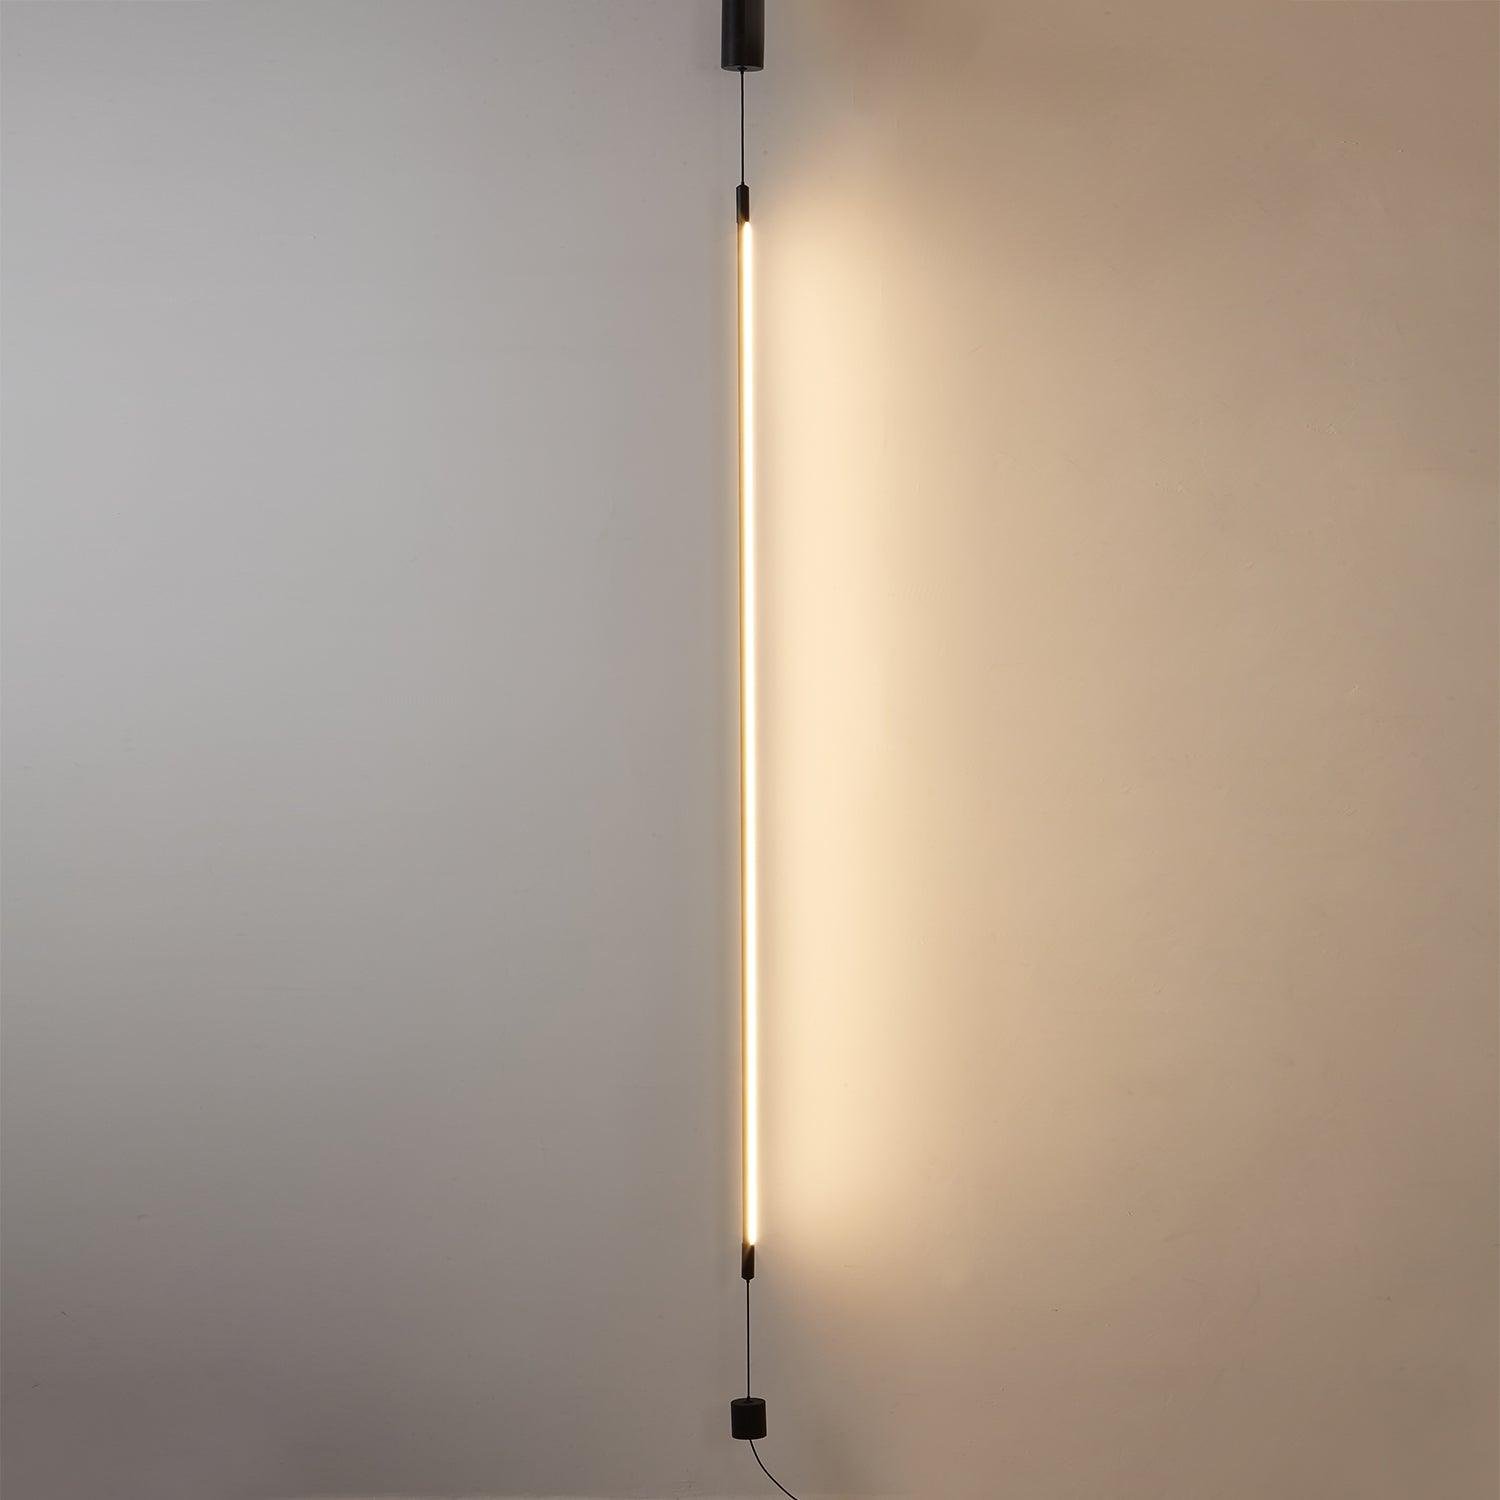 Cabinet Stand Lamp: 0.6" Diameter x 35.4" Height, Black Color, Cool Light, Sleek Design